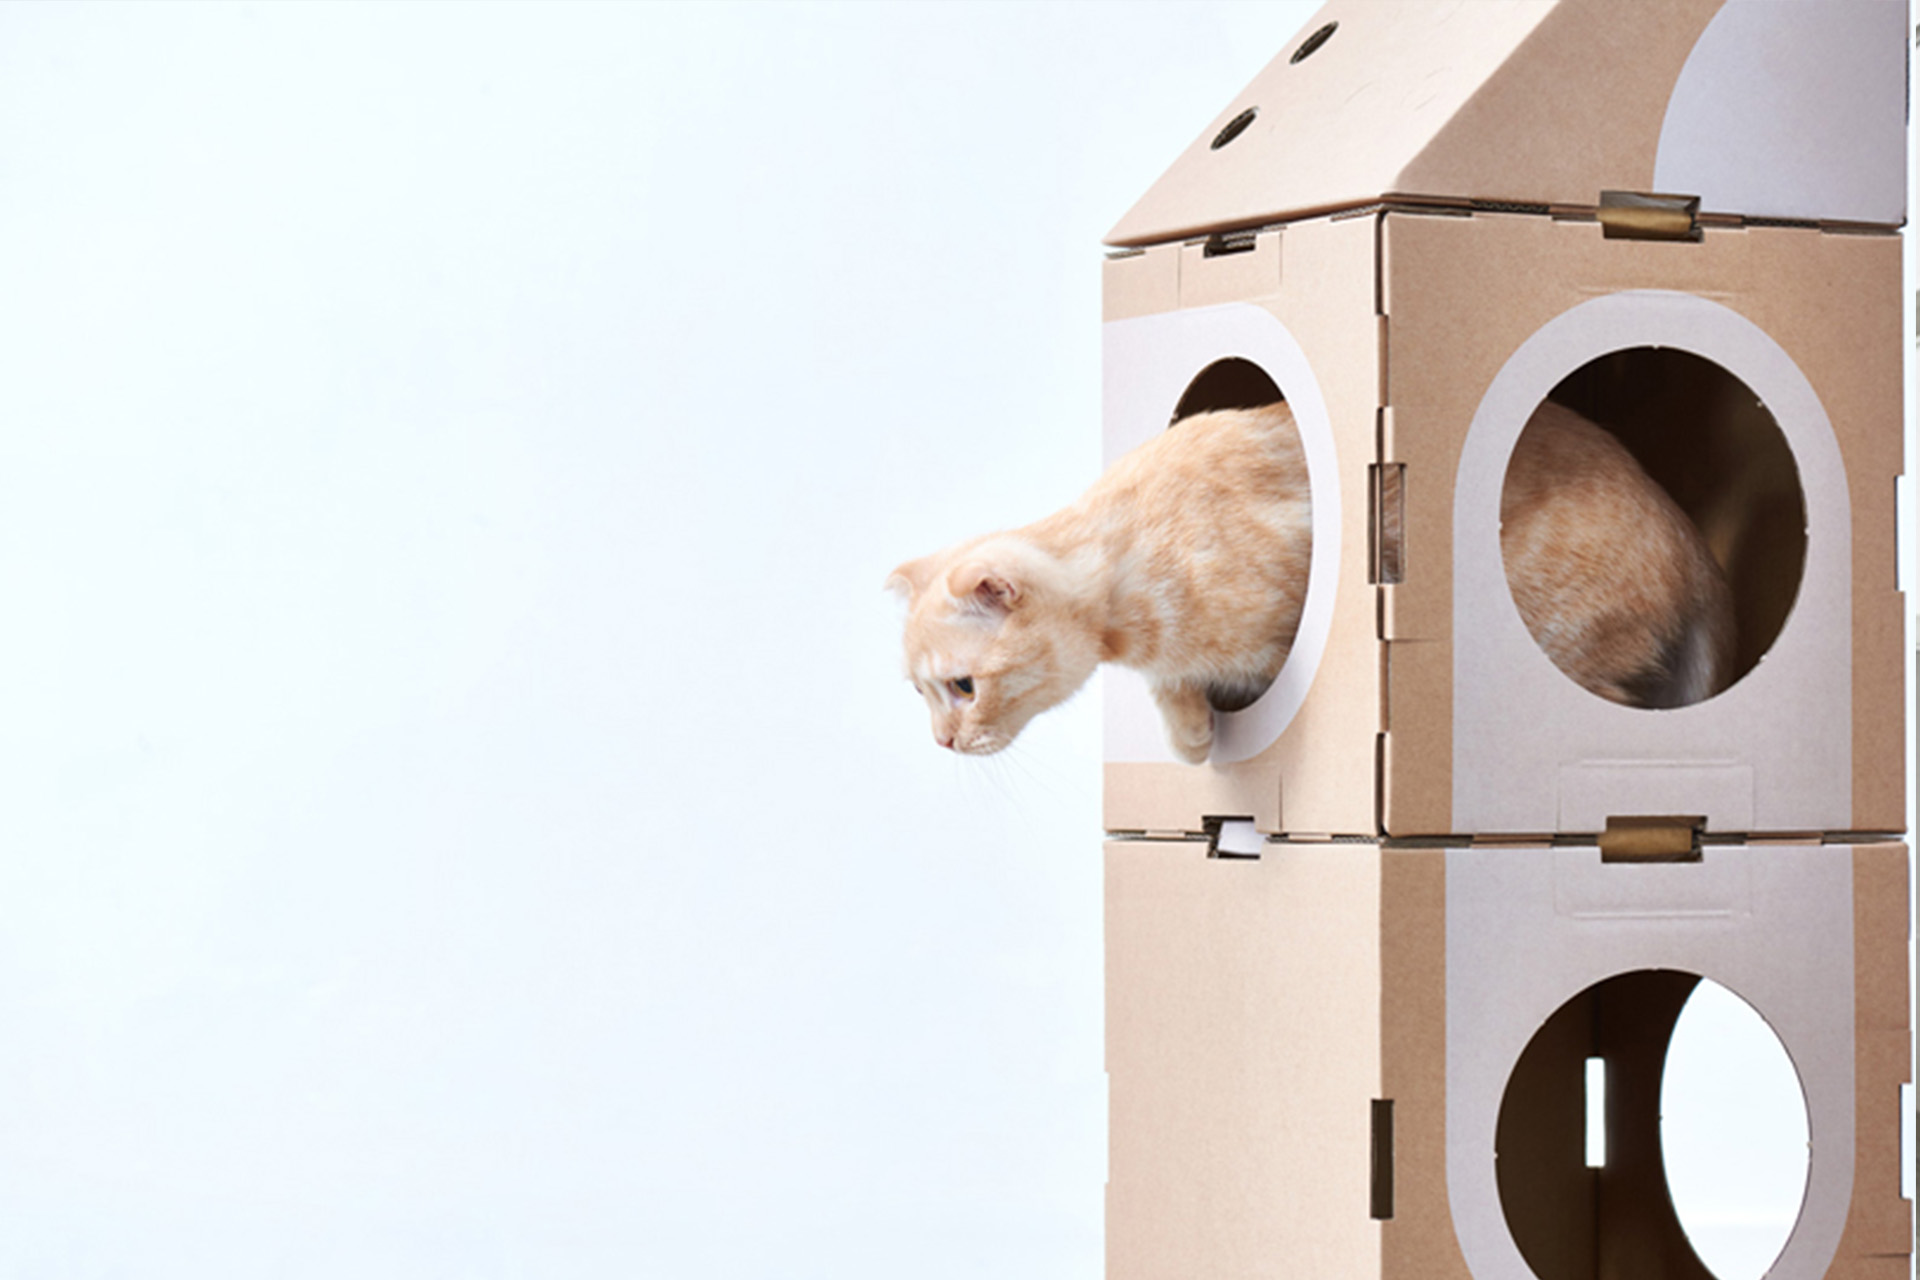 Cat thing. Картонный Лабиринт для кошек. Картонный домик для кошки. Домик для кошки из коробки. Домик для кошки из коробок.